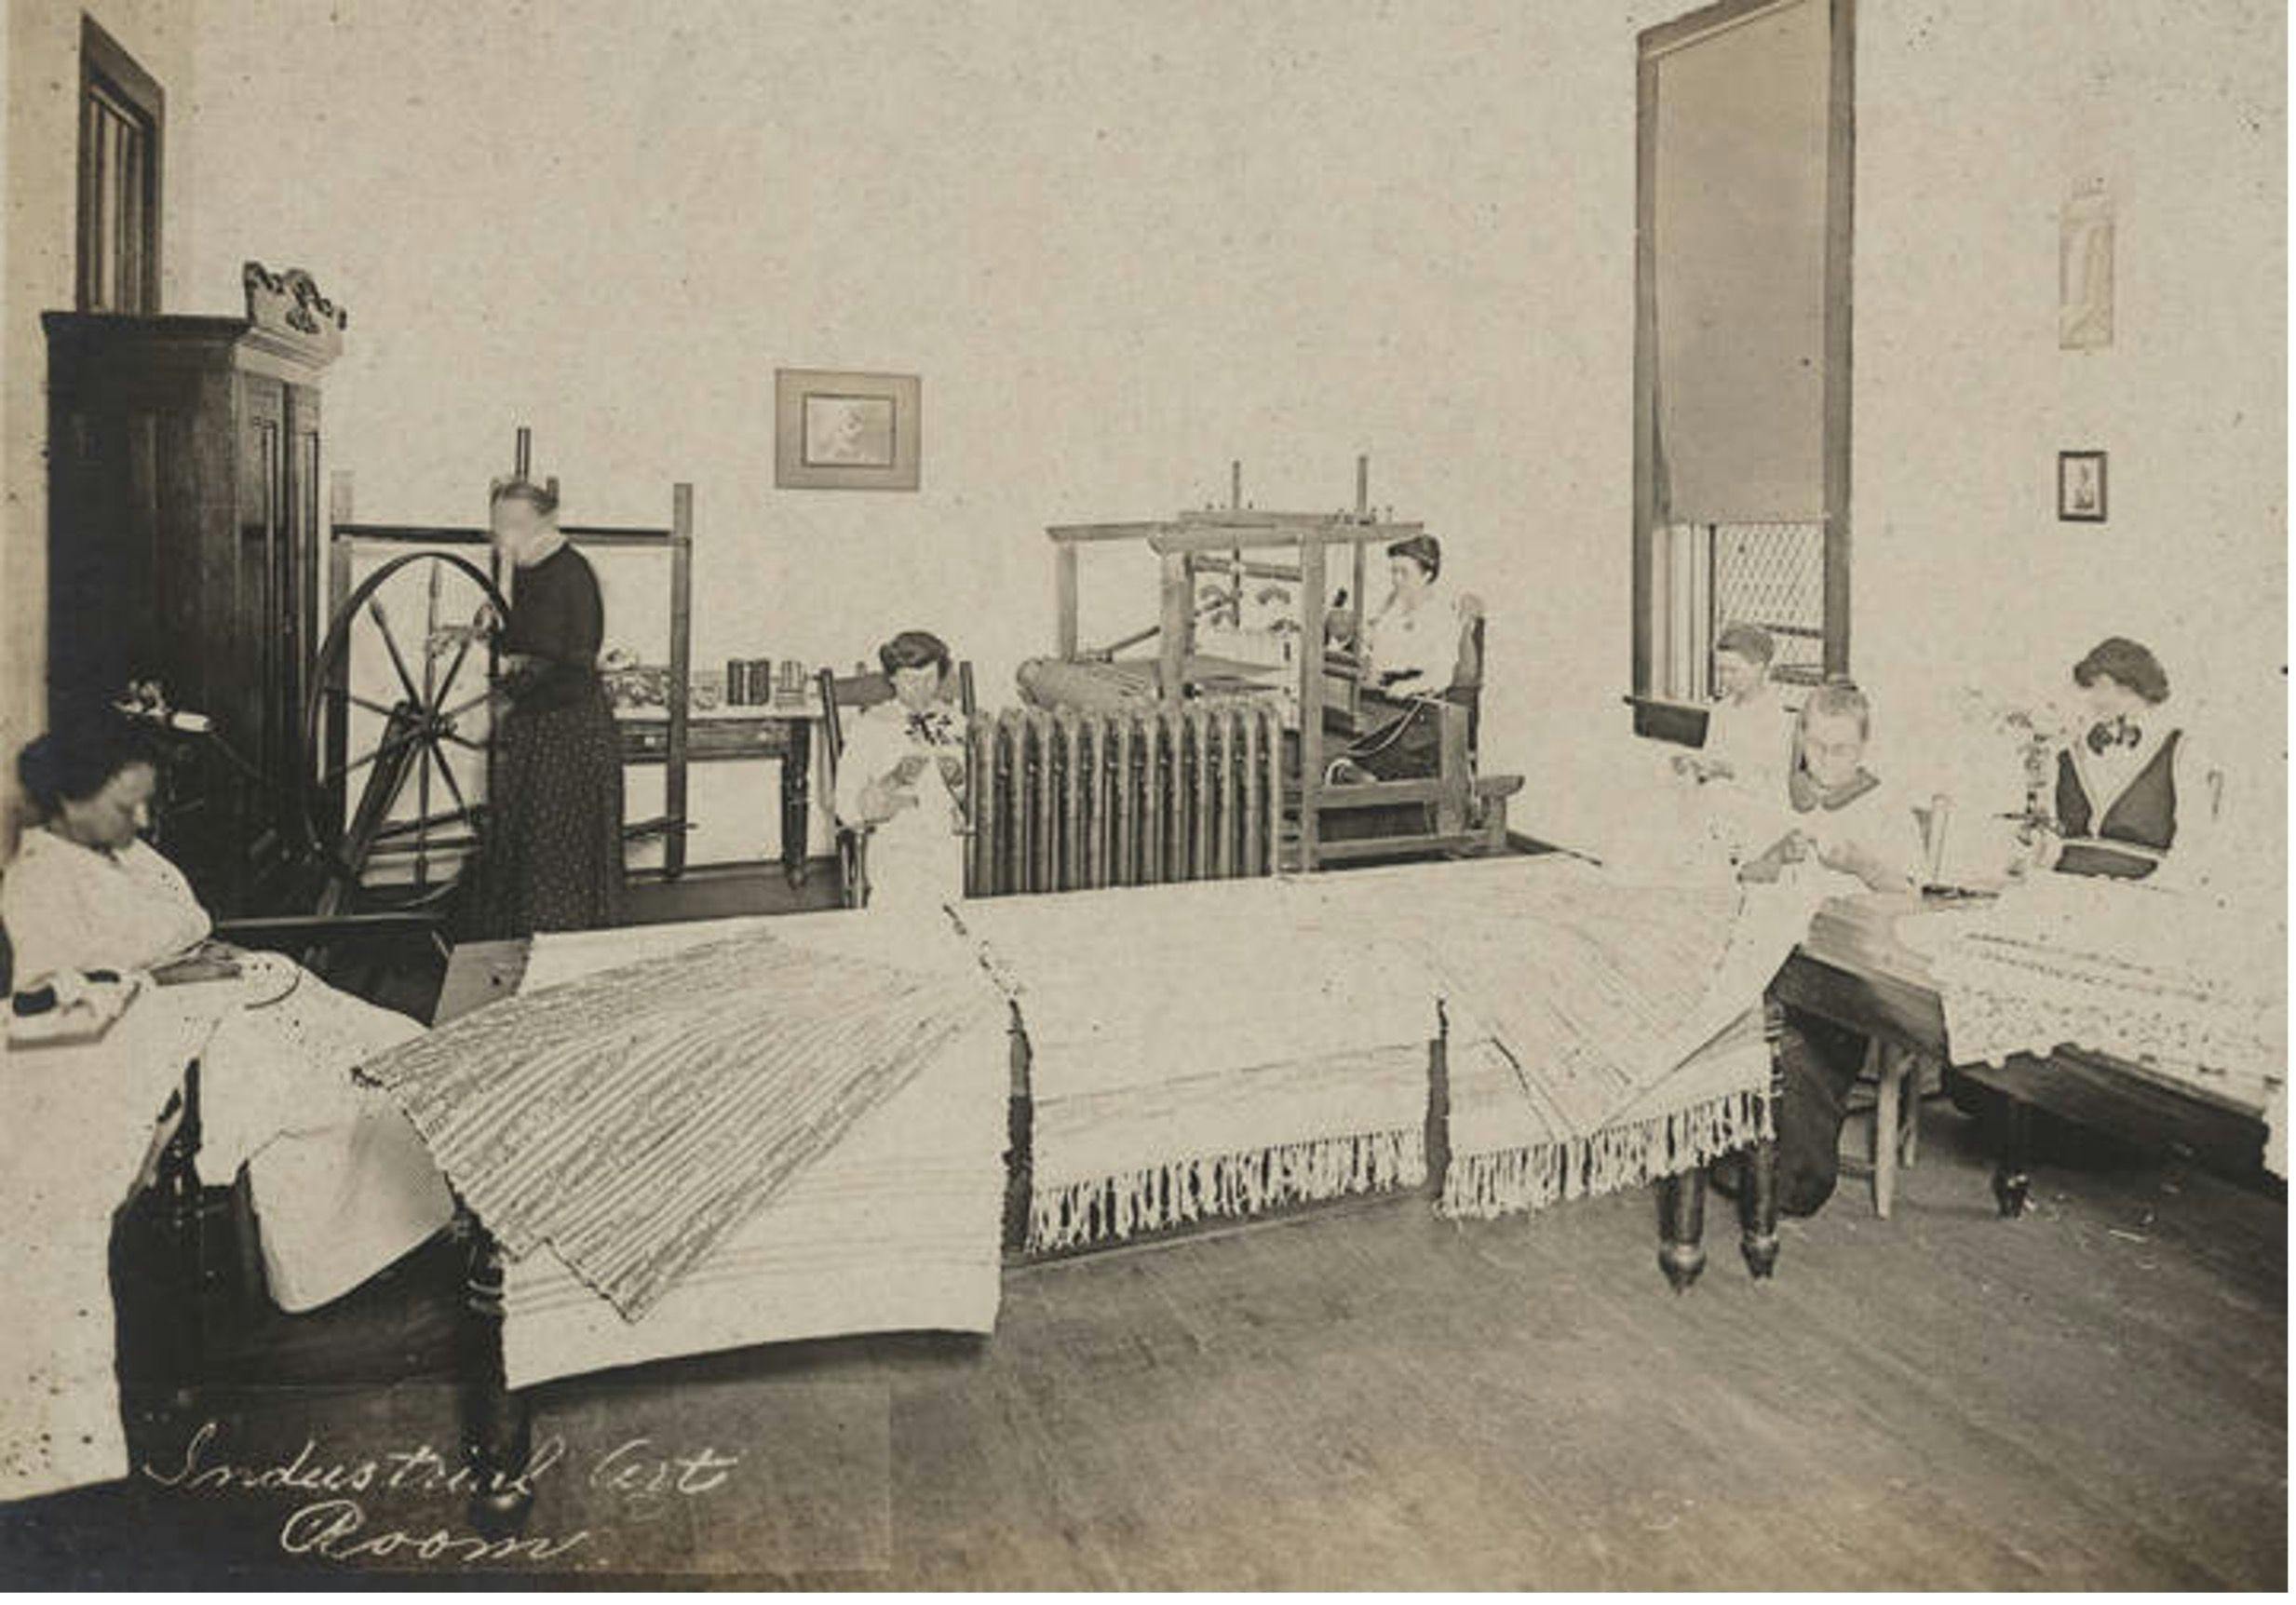 Figure 2. “Industrial Art Room”—Bryce Hospital, Alabama, 1916